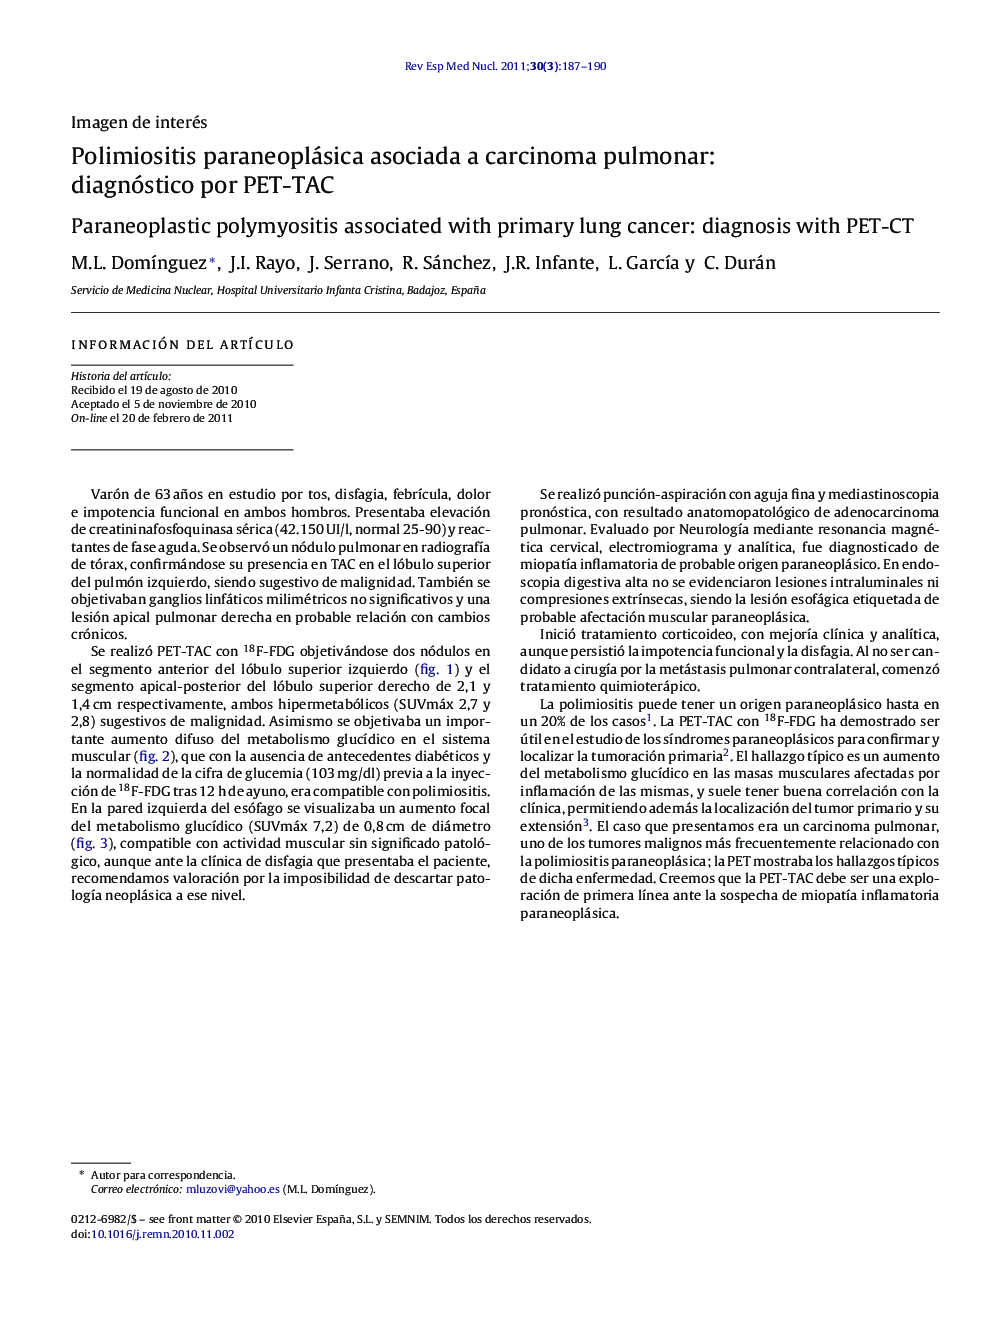 Polimiositis paraneoplásica asociada a carcinoma pulmonar: diagnóstico por PET-TAC